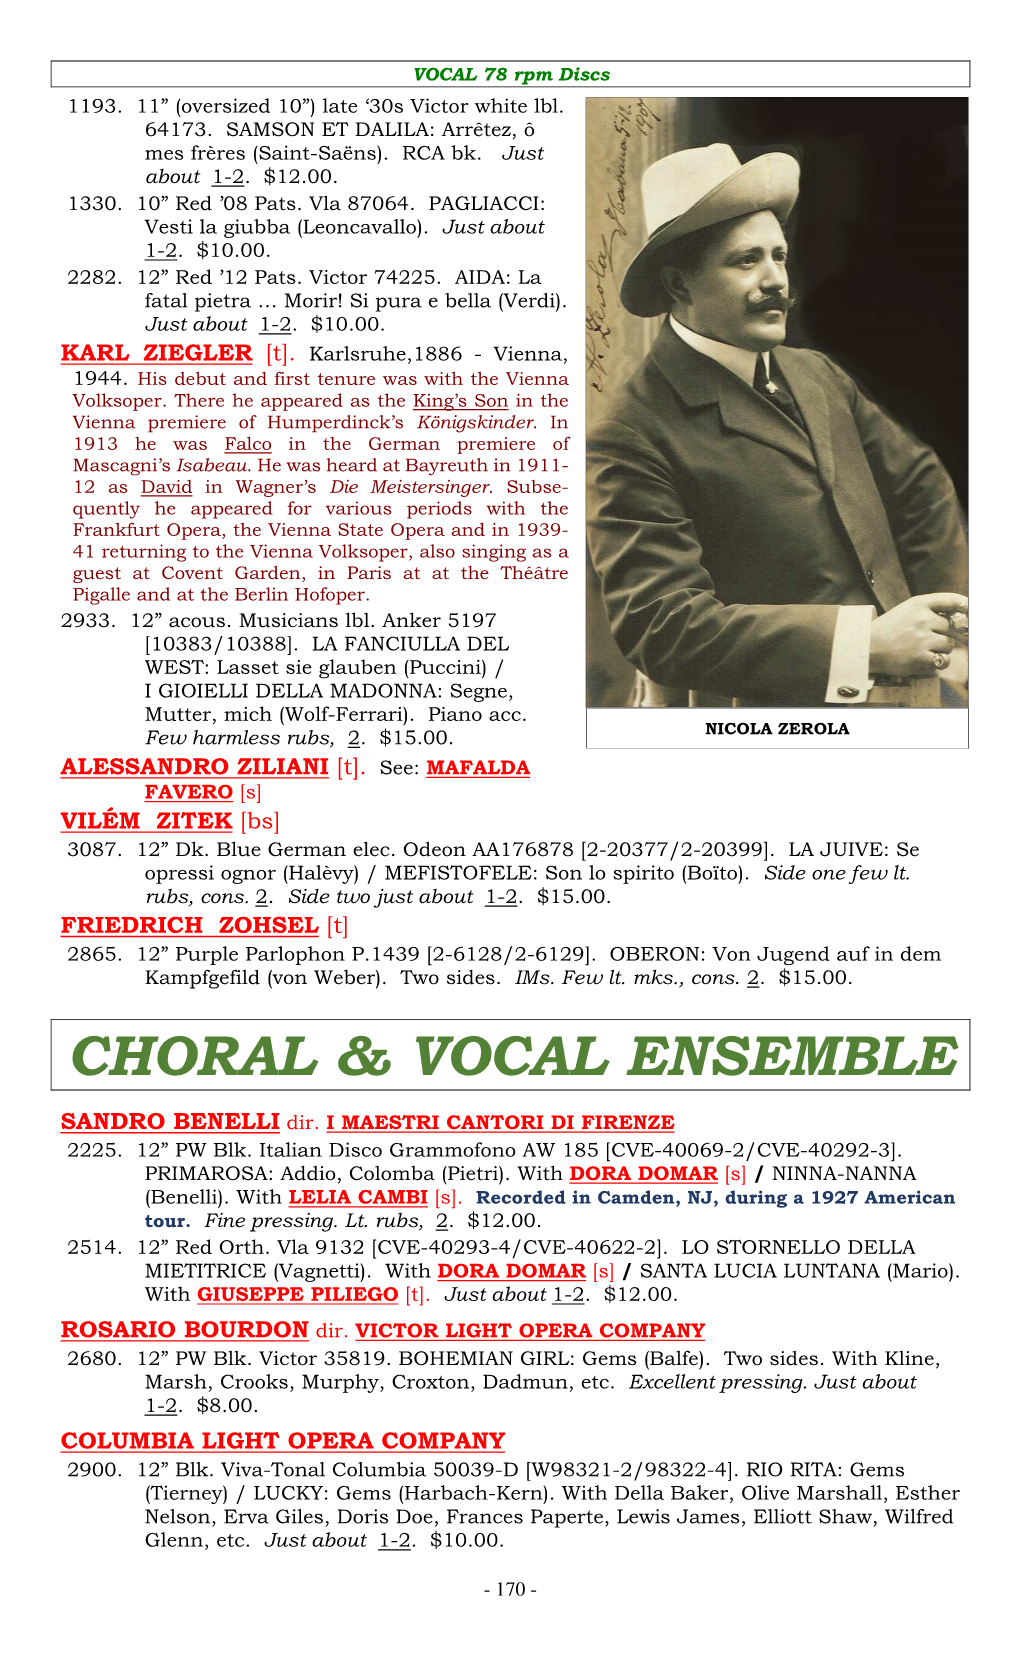 Choral & Vocal Ensemble